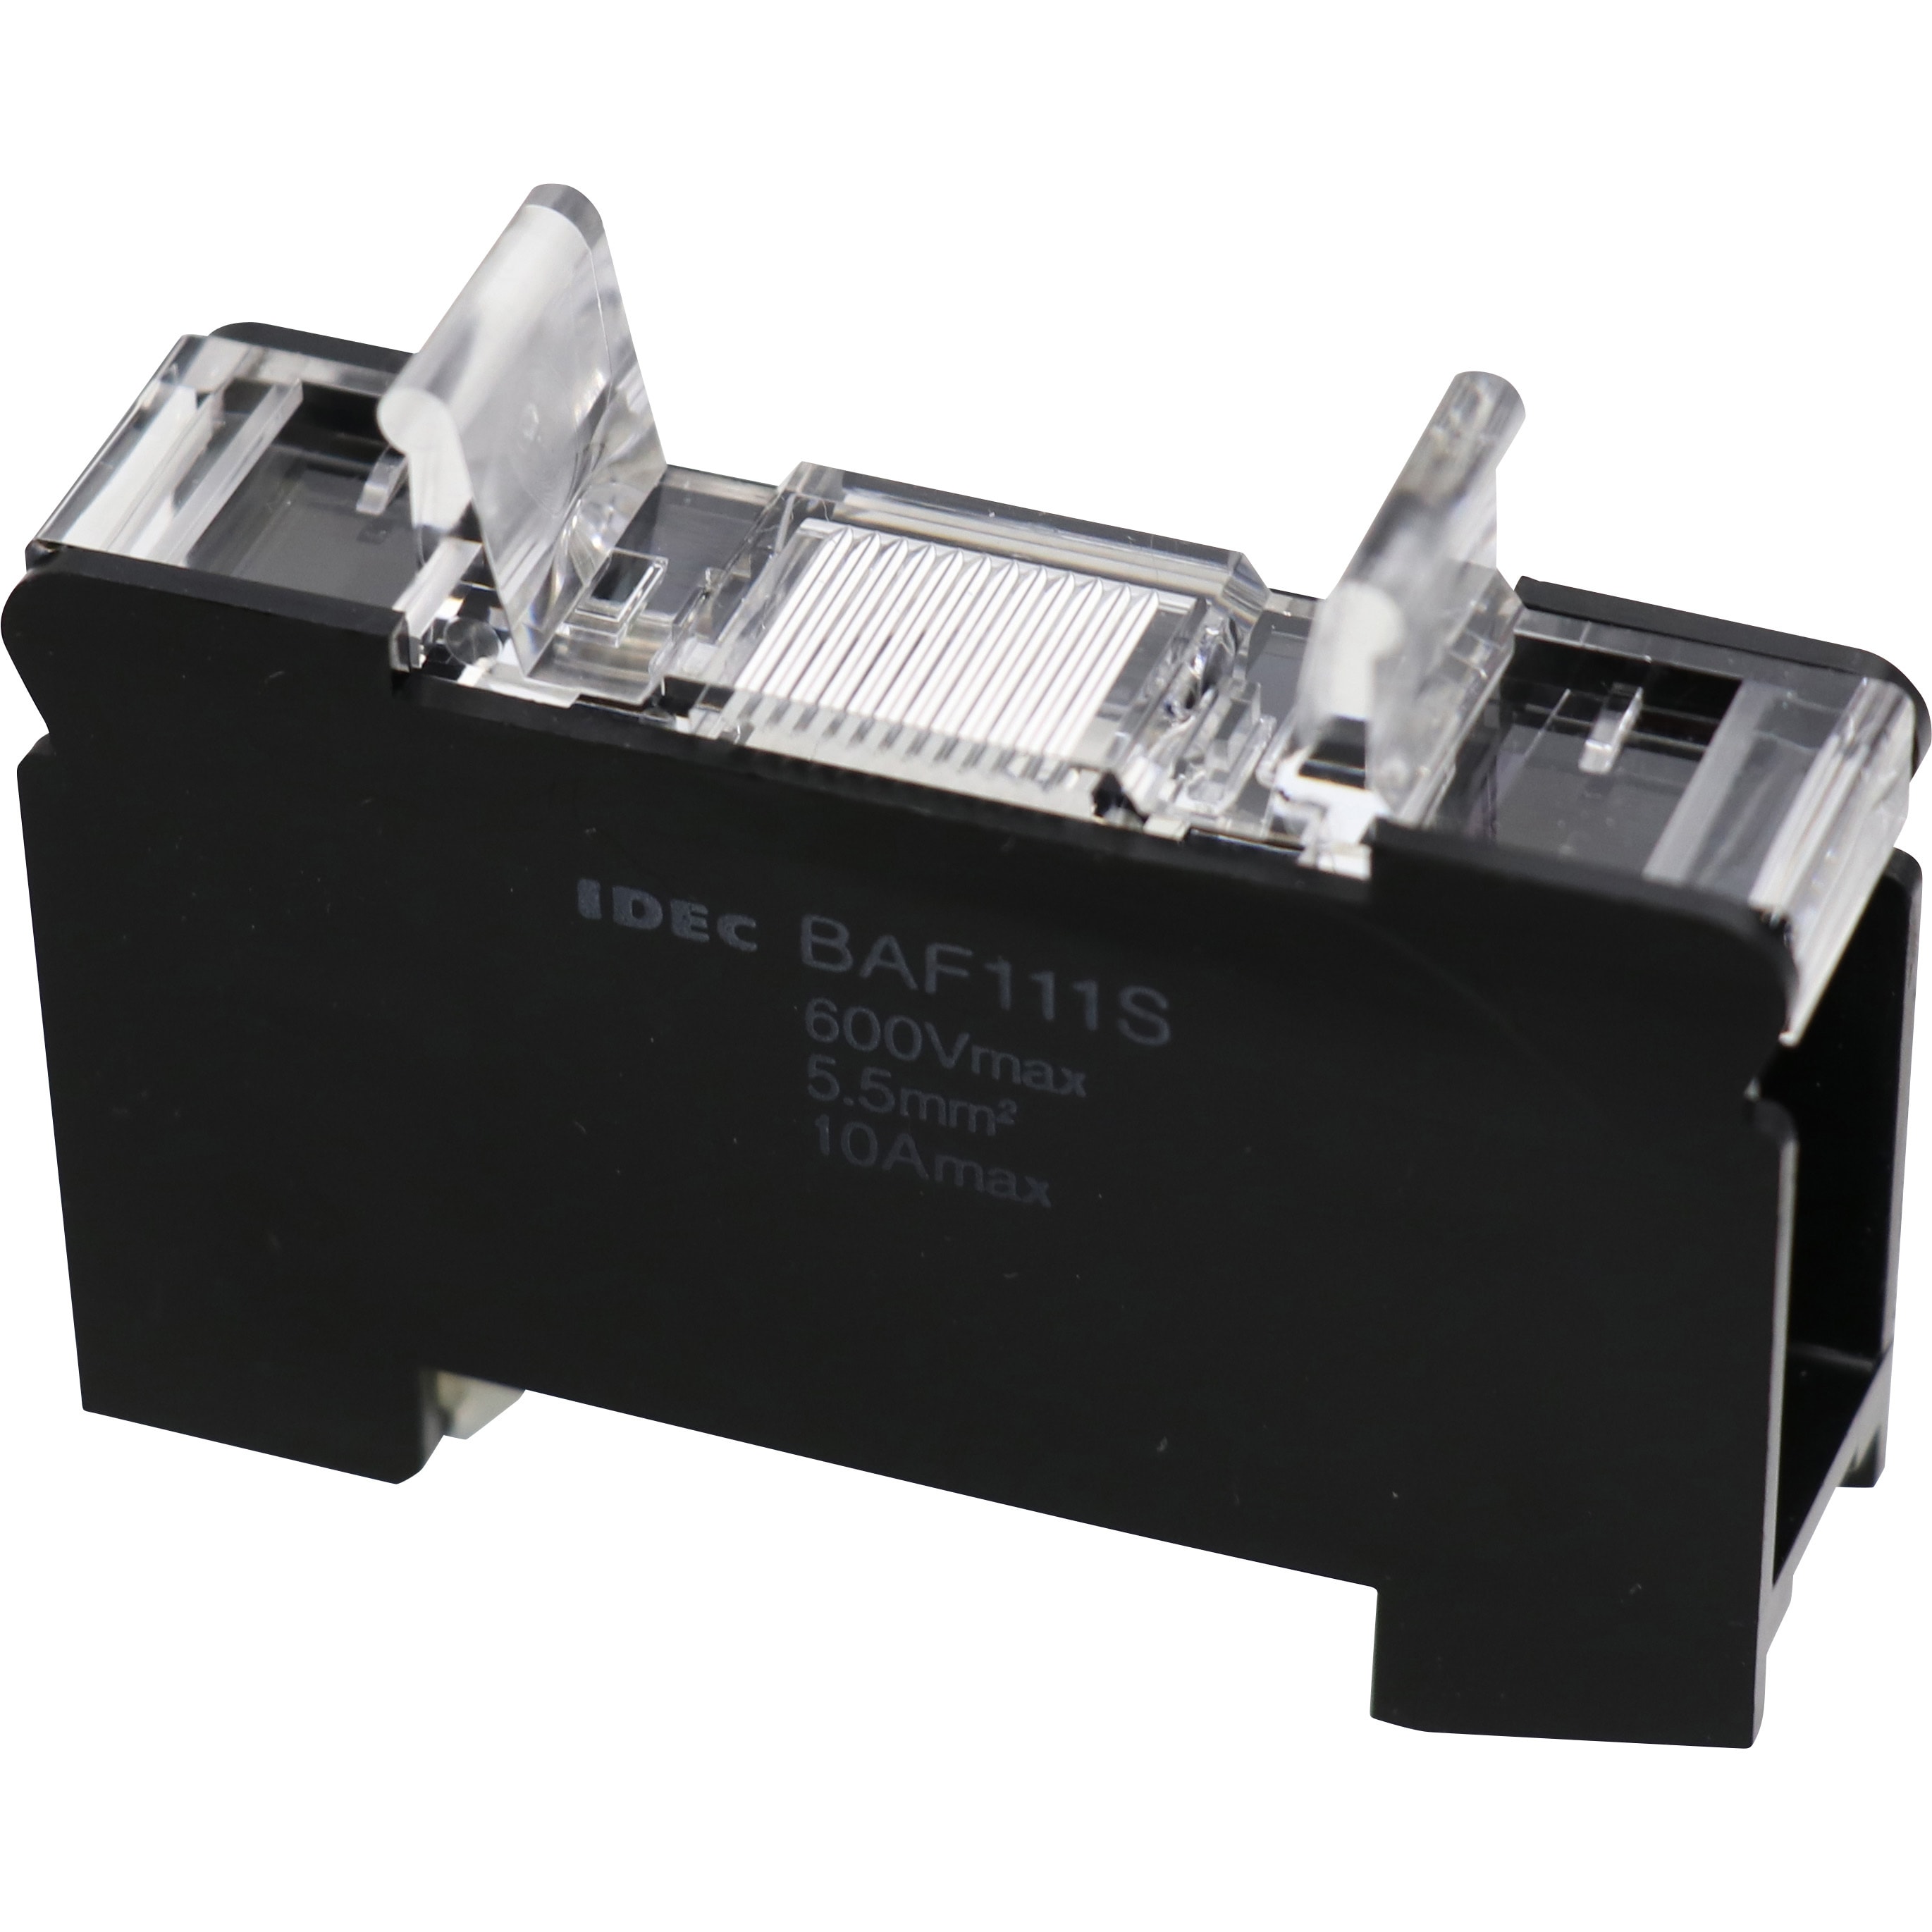 BAF111S1APN20 BAシリーズターミナルブロック 1箱(20個) IDEC(和泉電気